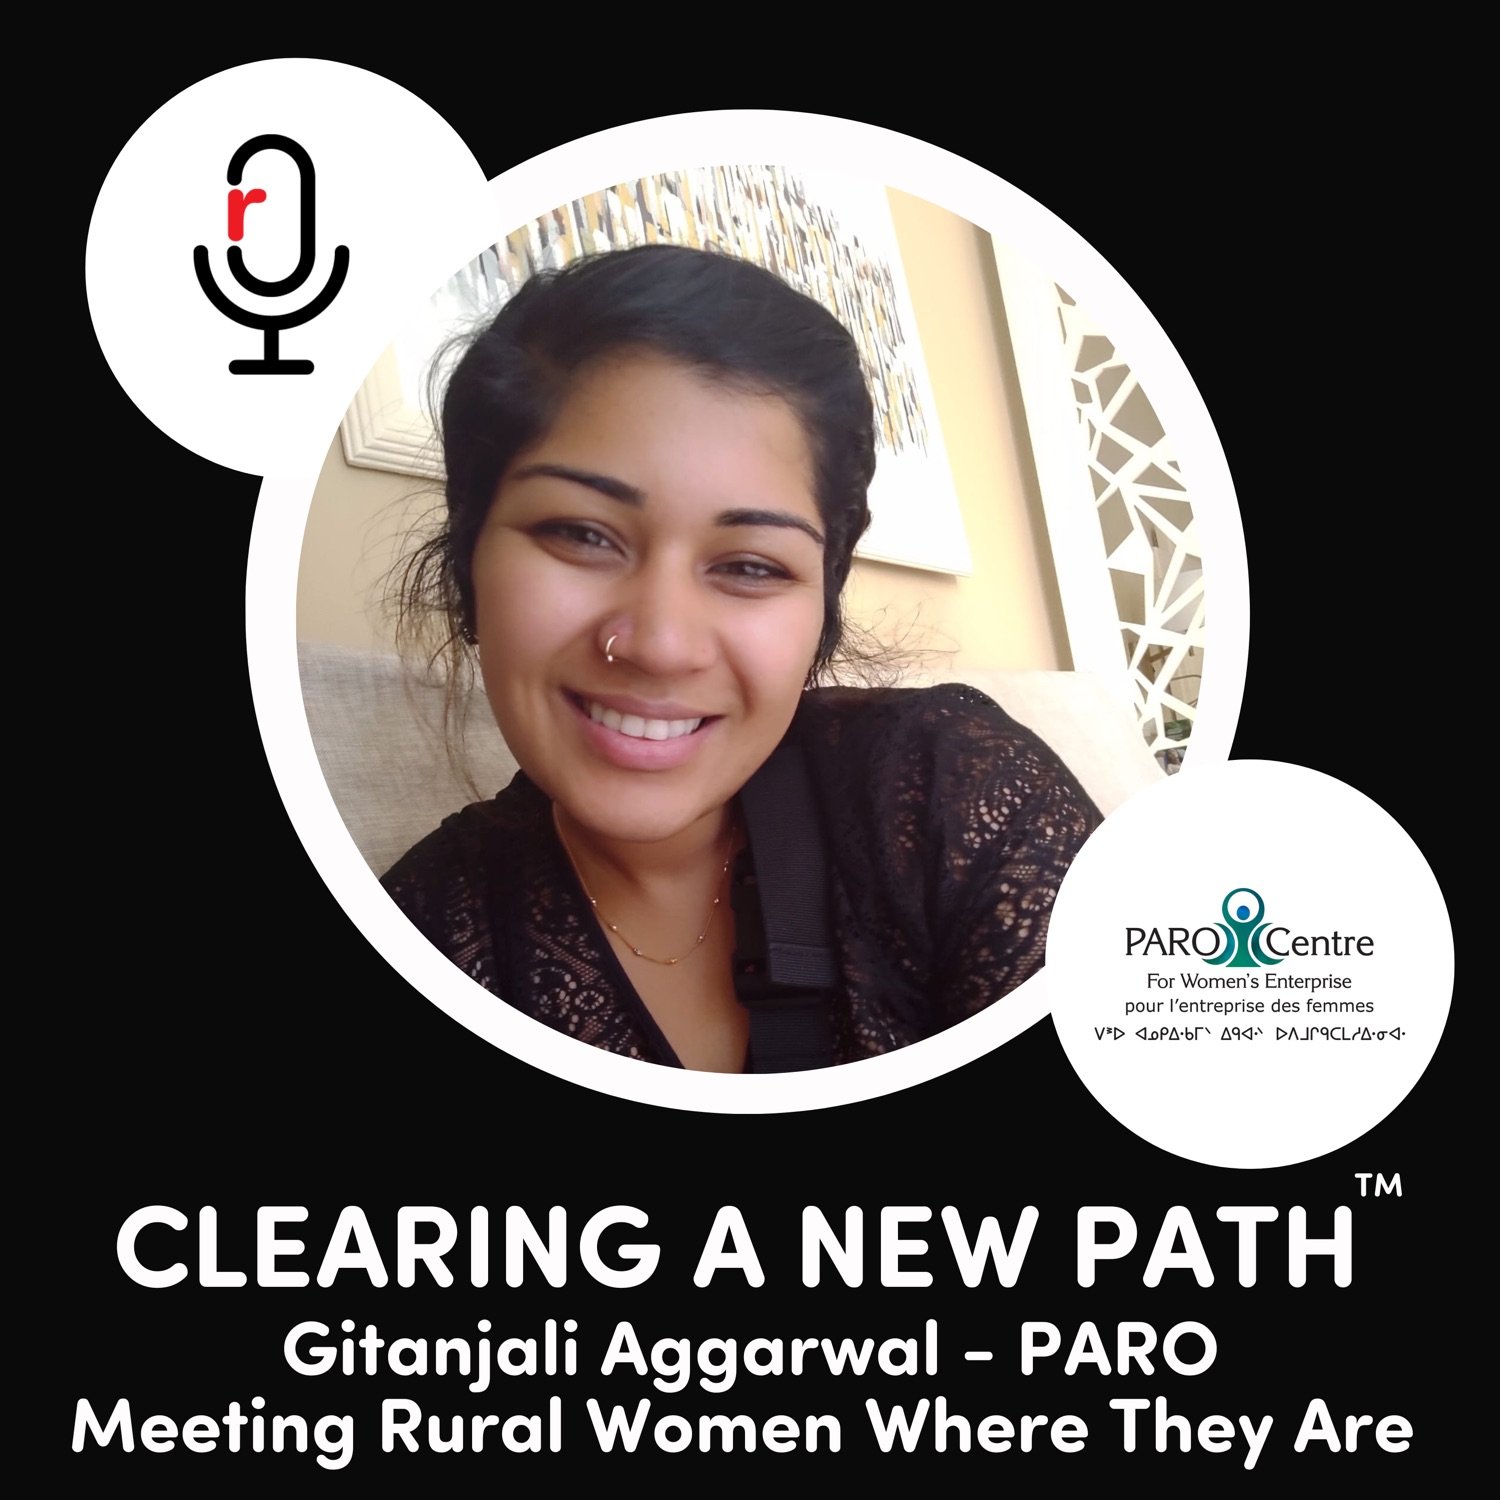 Gitanjali Aggarwal - PARO - Meeting Rural Women Where They Are